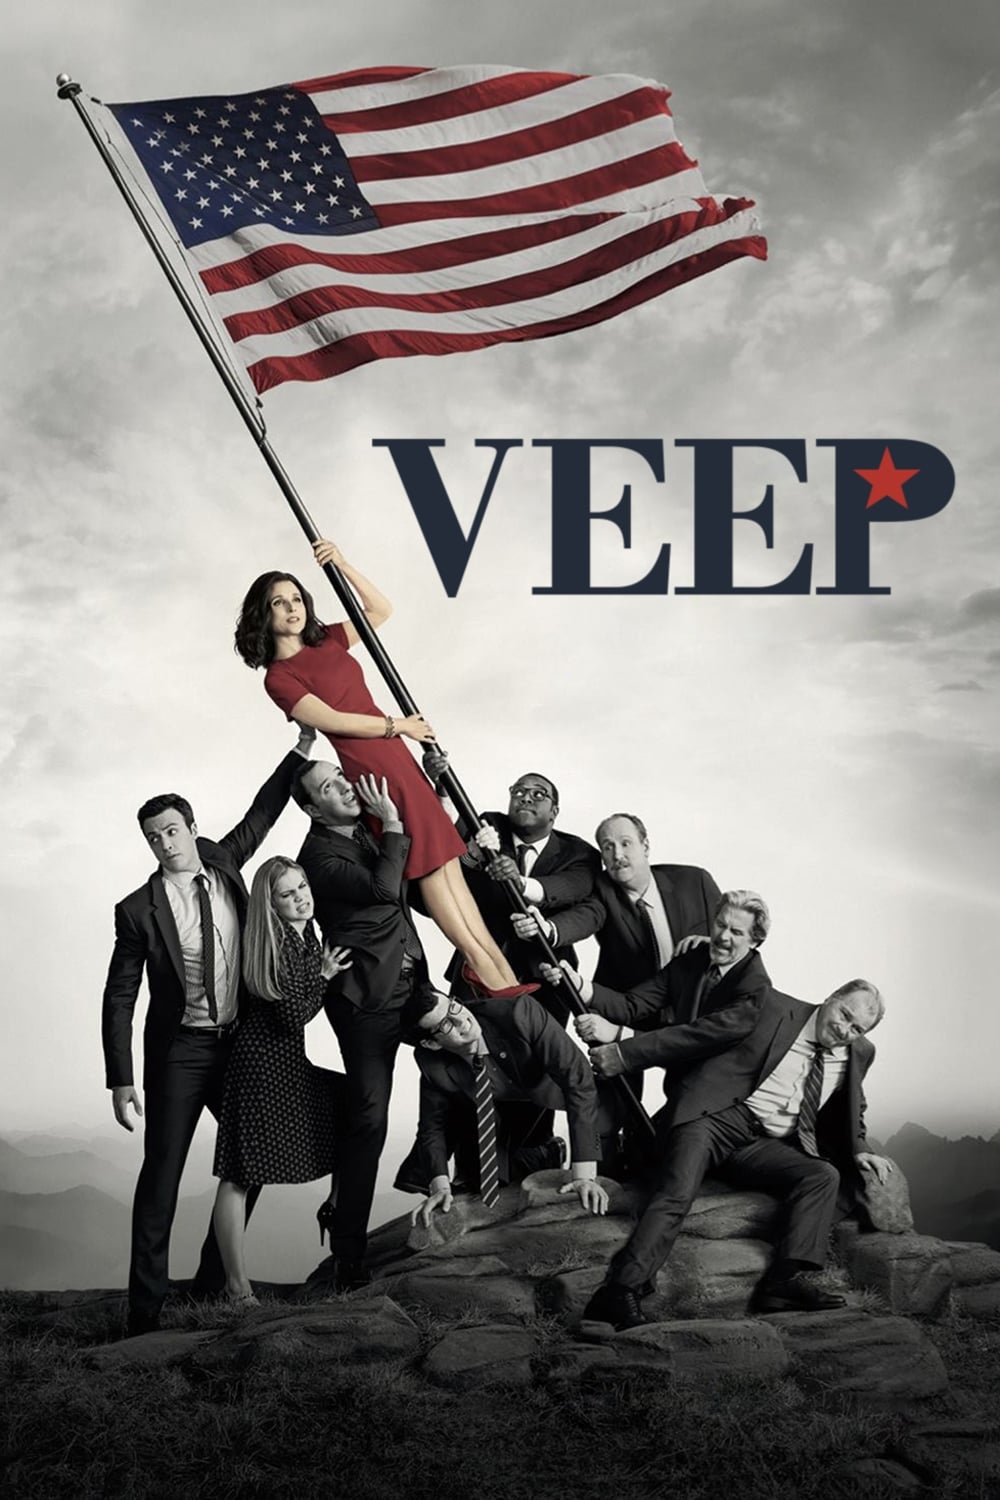 Veep – Die Vizepräsidentin (2012)